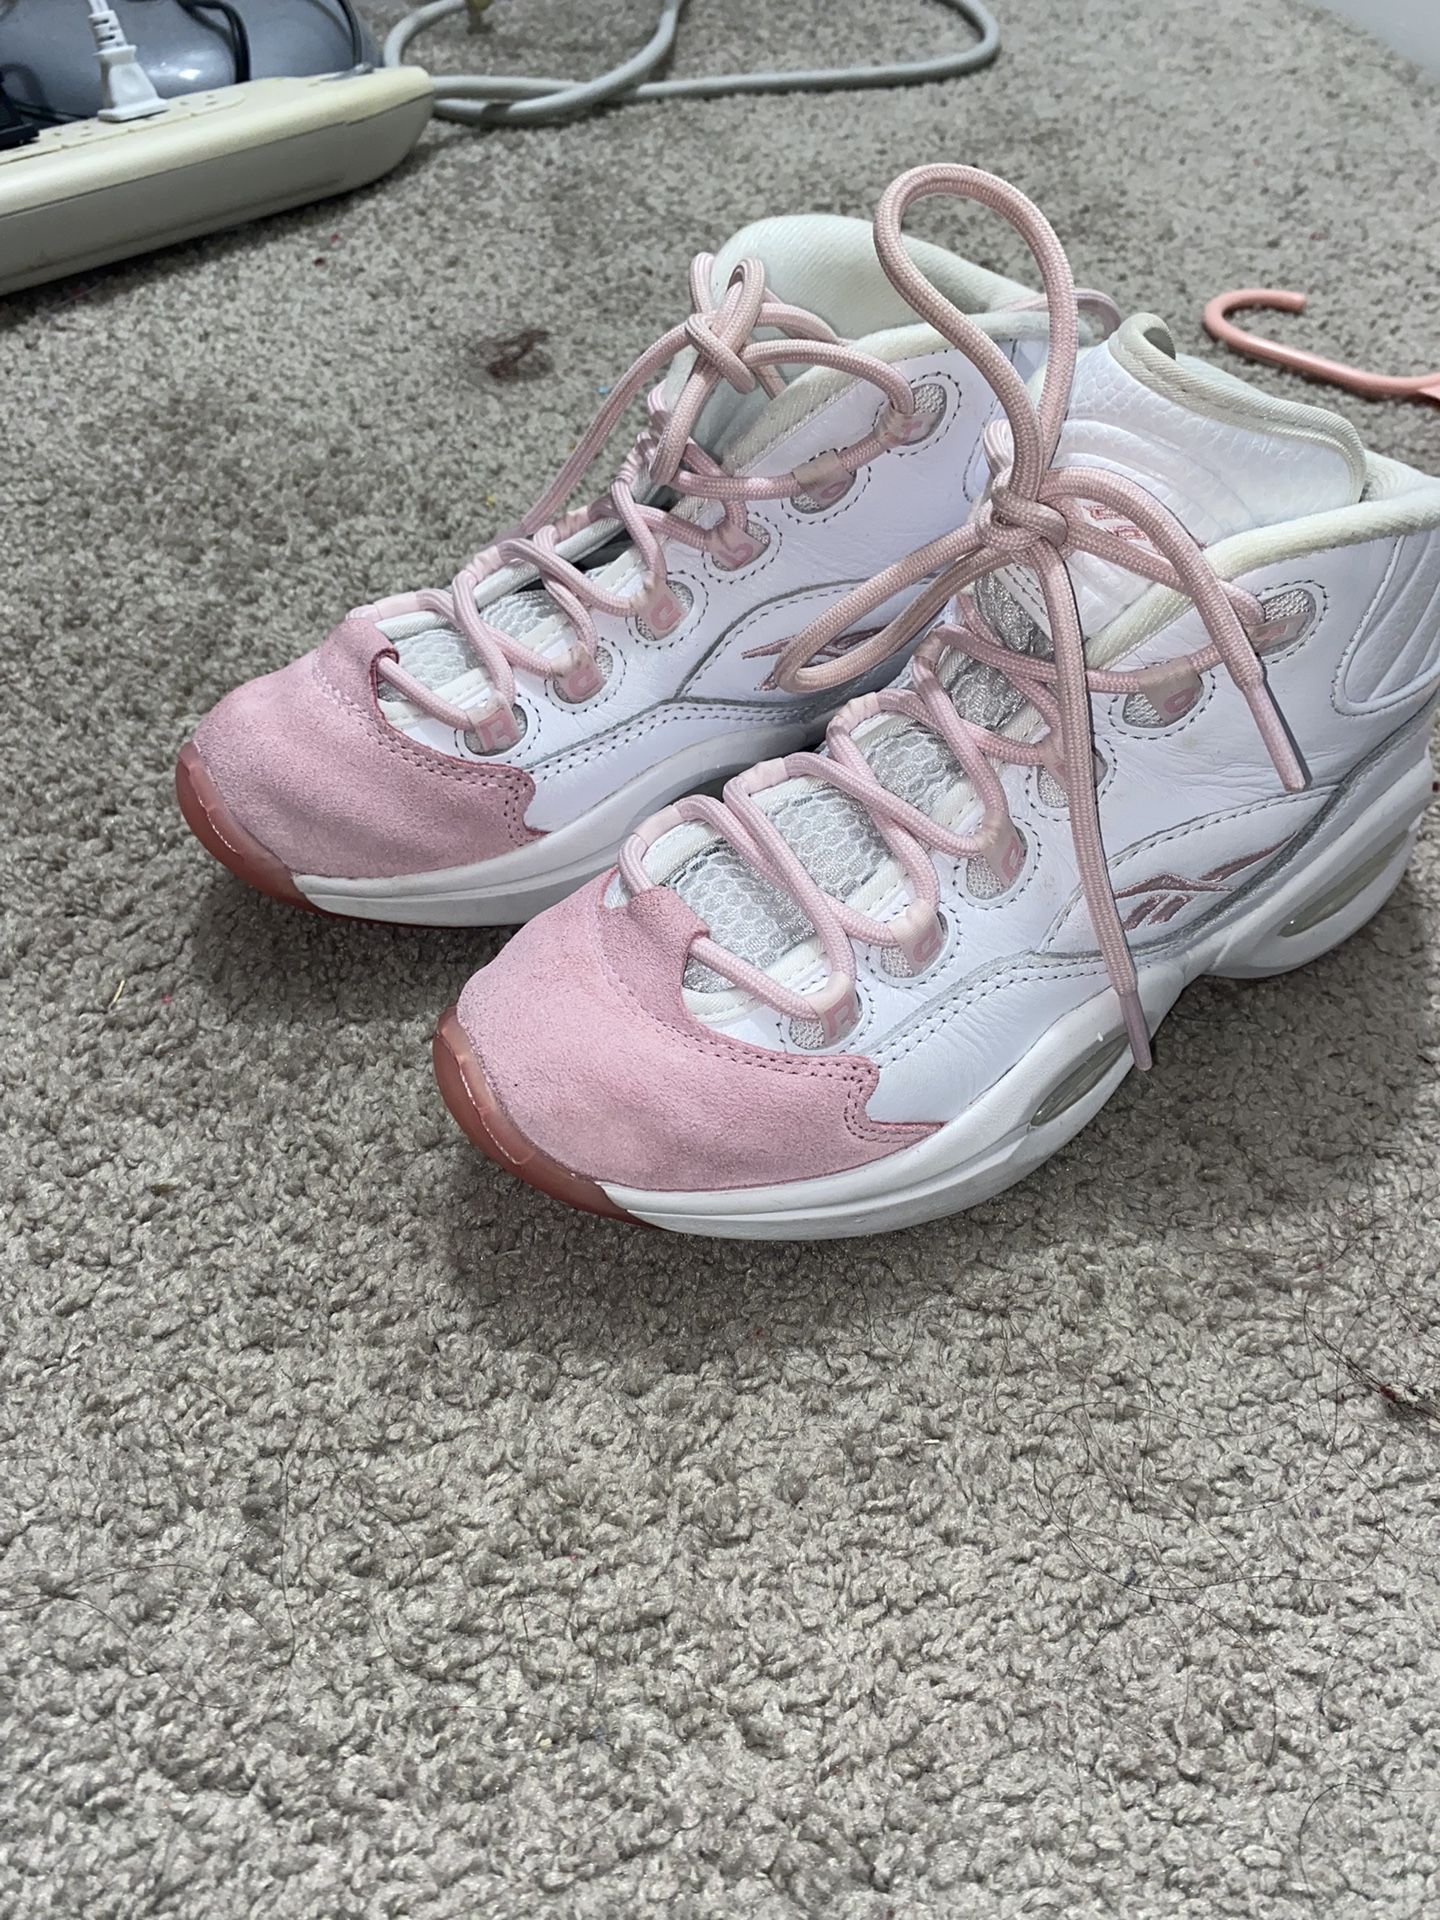 Reebok Question Mid Pink Toe Sneakers